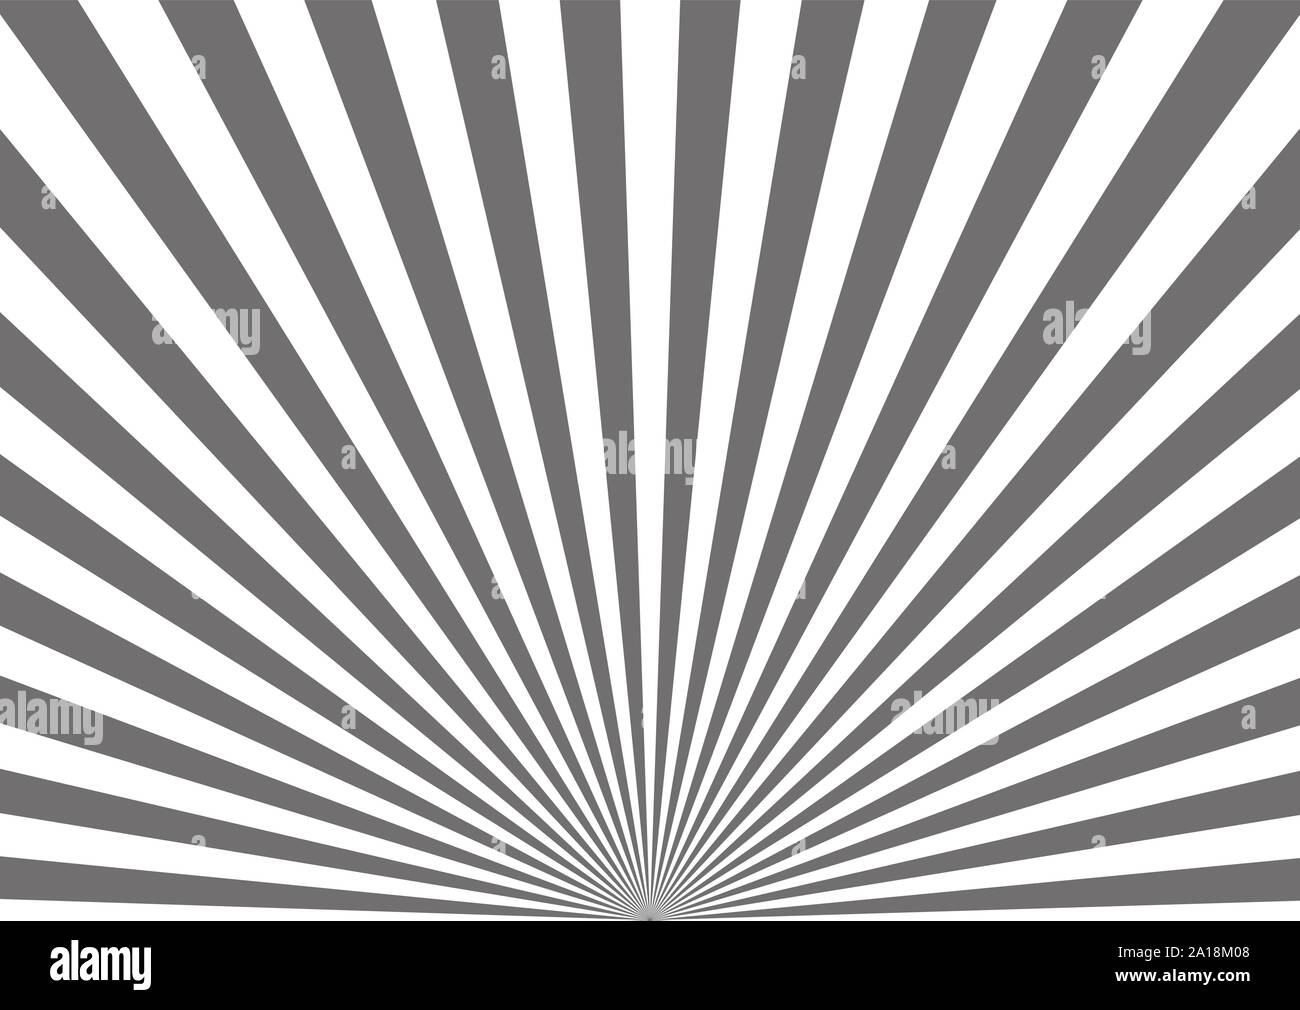 Sunburst, starburst background, converging lines. Vector illustration. Stock Vector